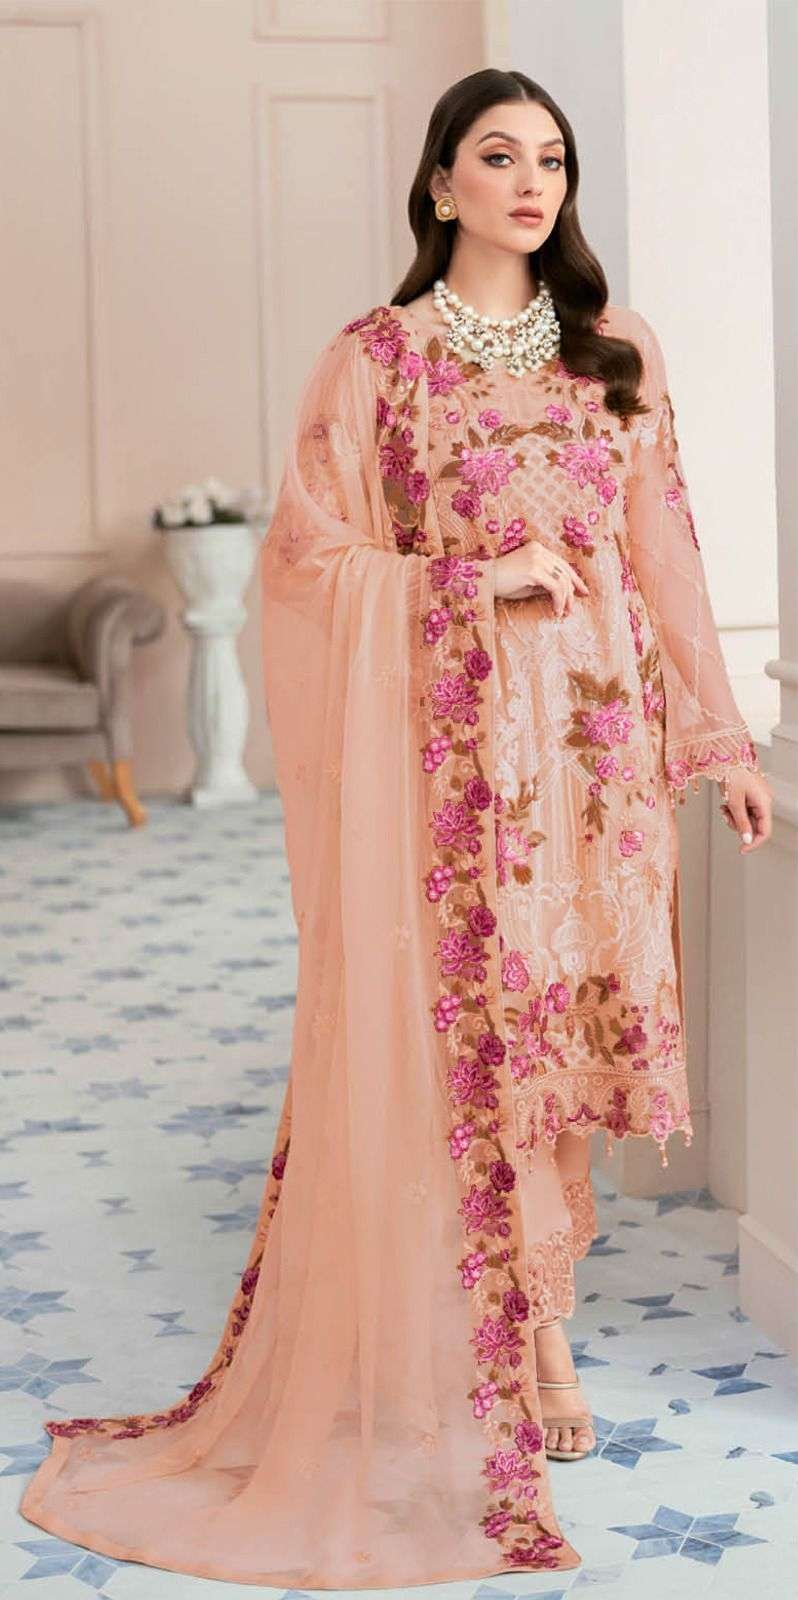 serine 119 series beautiful look designer pakistani salwar kameez wholesale rates in surat